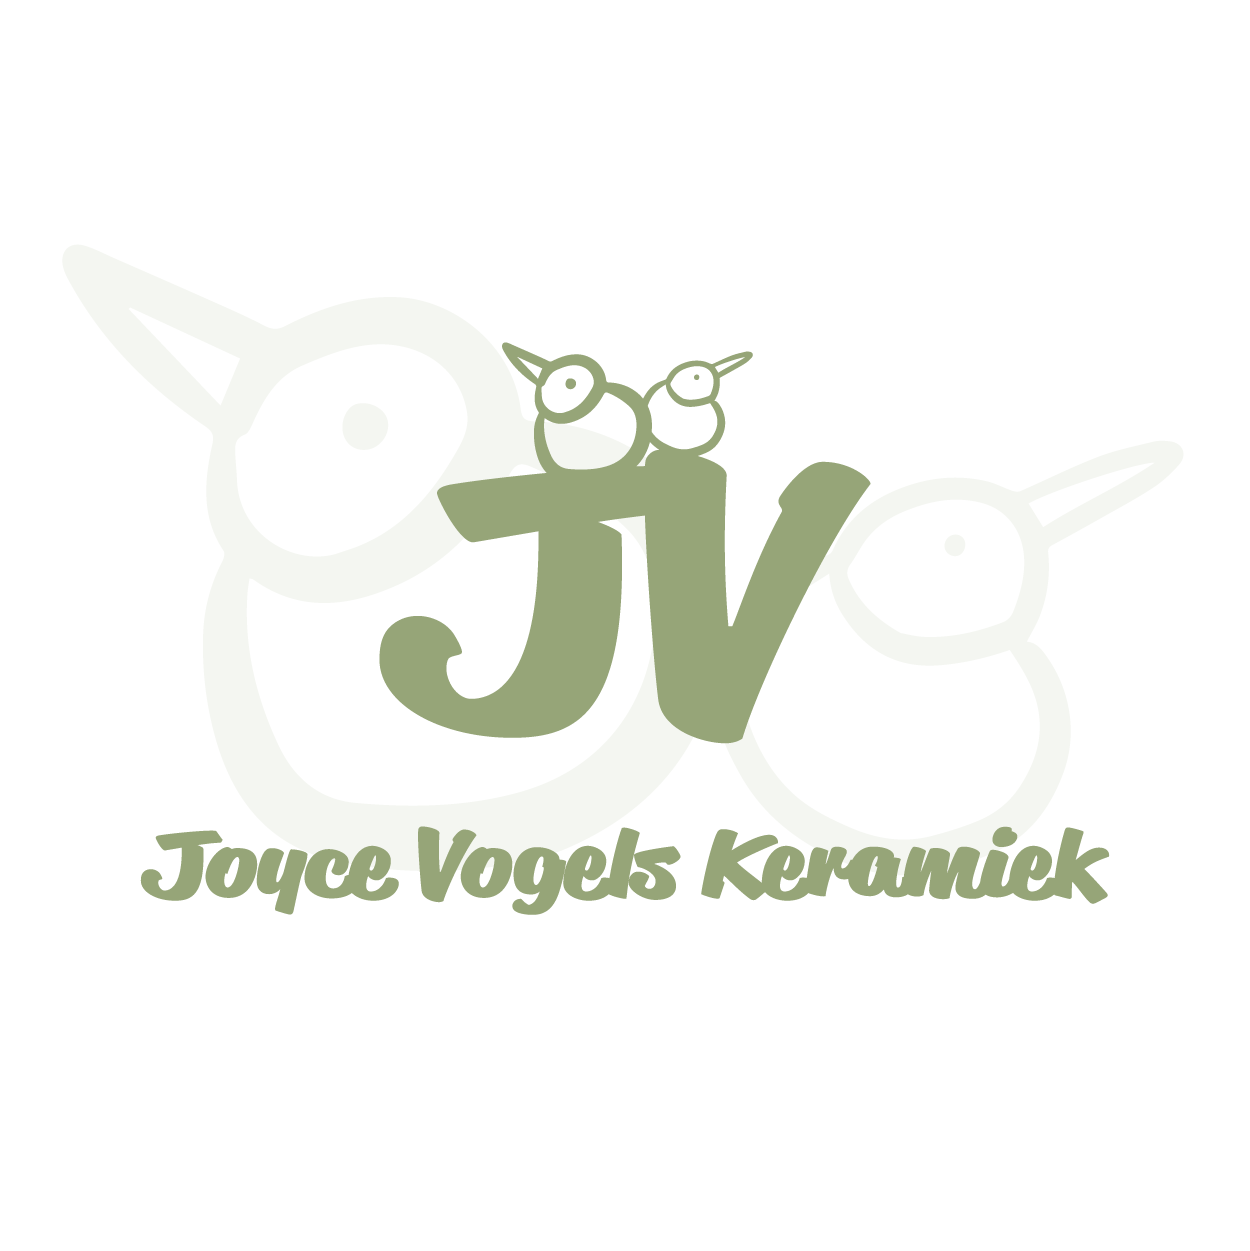 Joyce Vogels Keramiek Logo